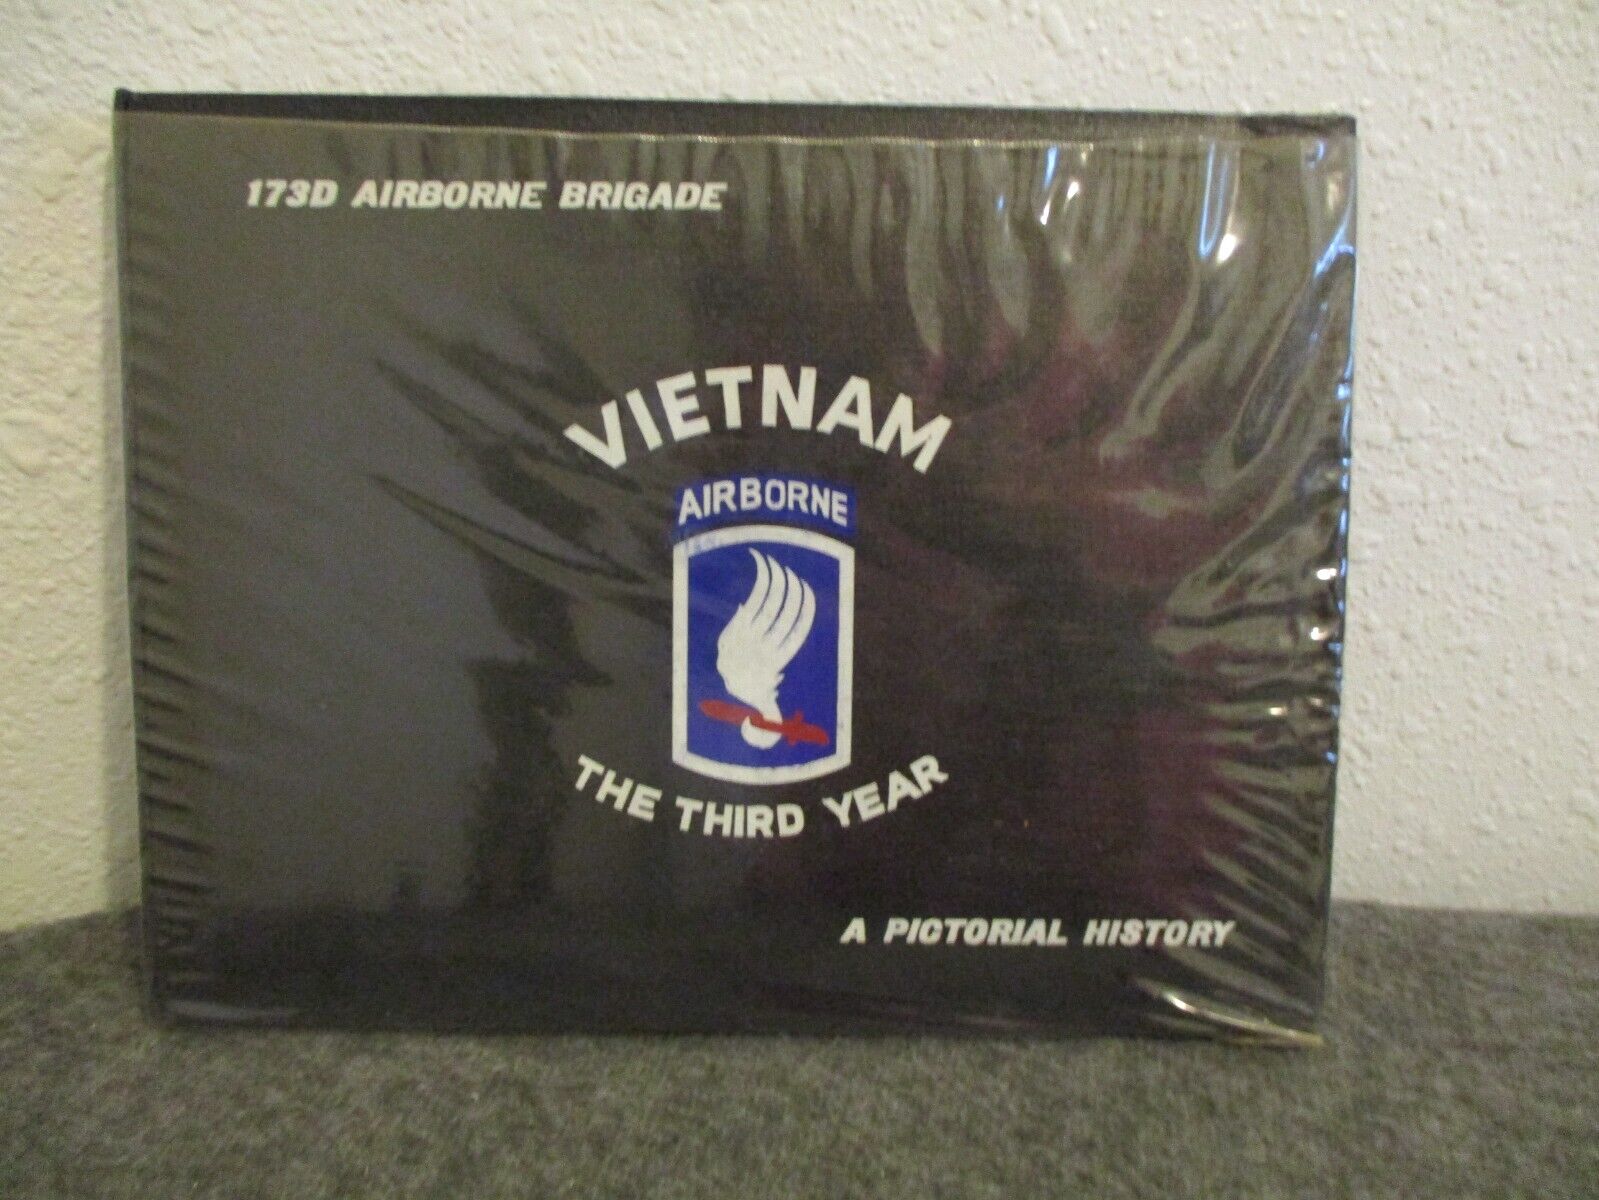 Vietnam The Third Year 173d Airborne Brigade A Pictorial History Book -veteran